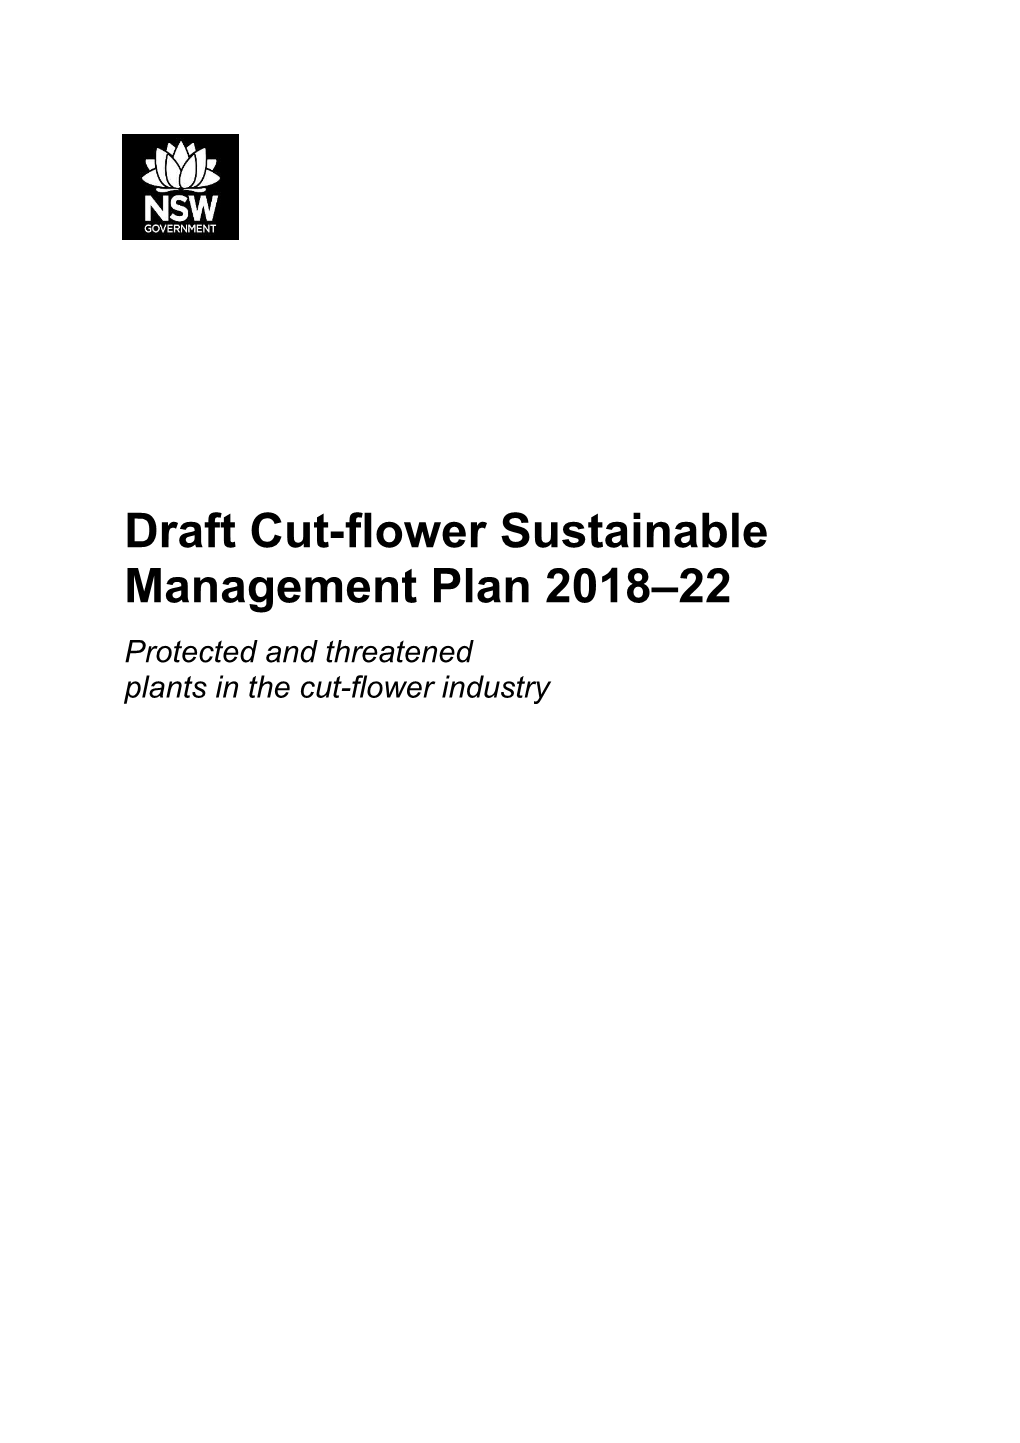 Draft Cut-Flower Sustainable Management Plan 2018 22